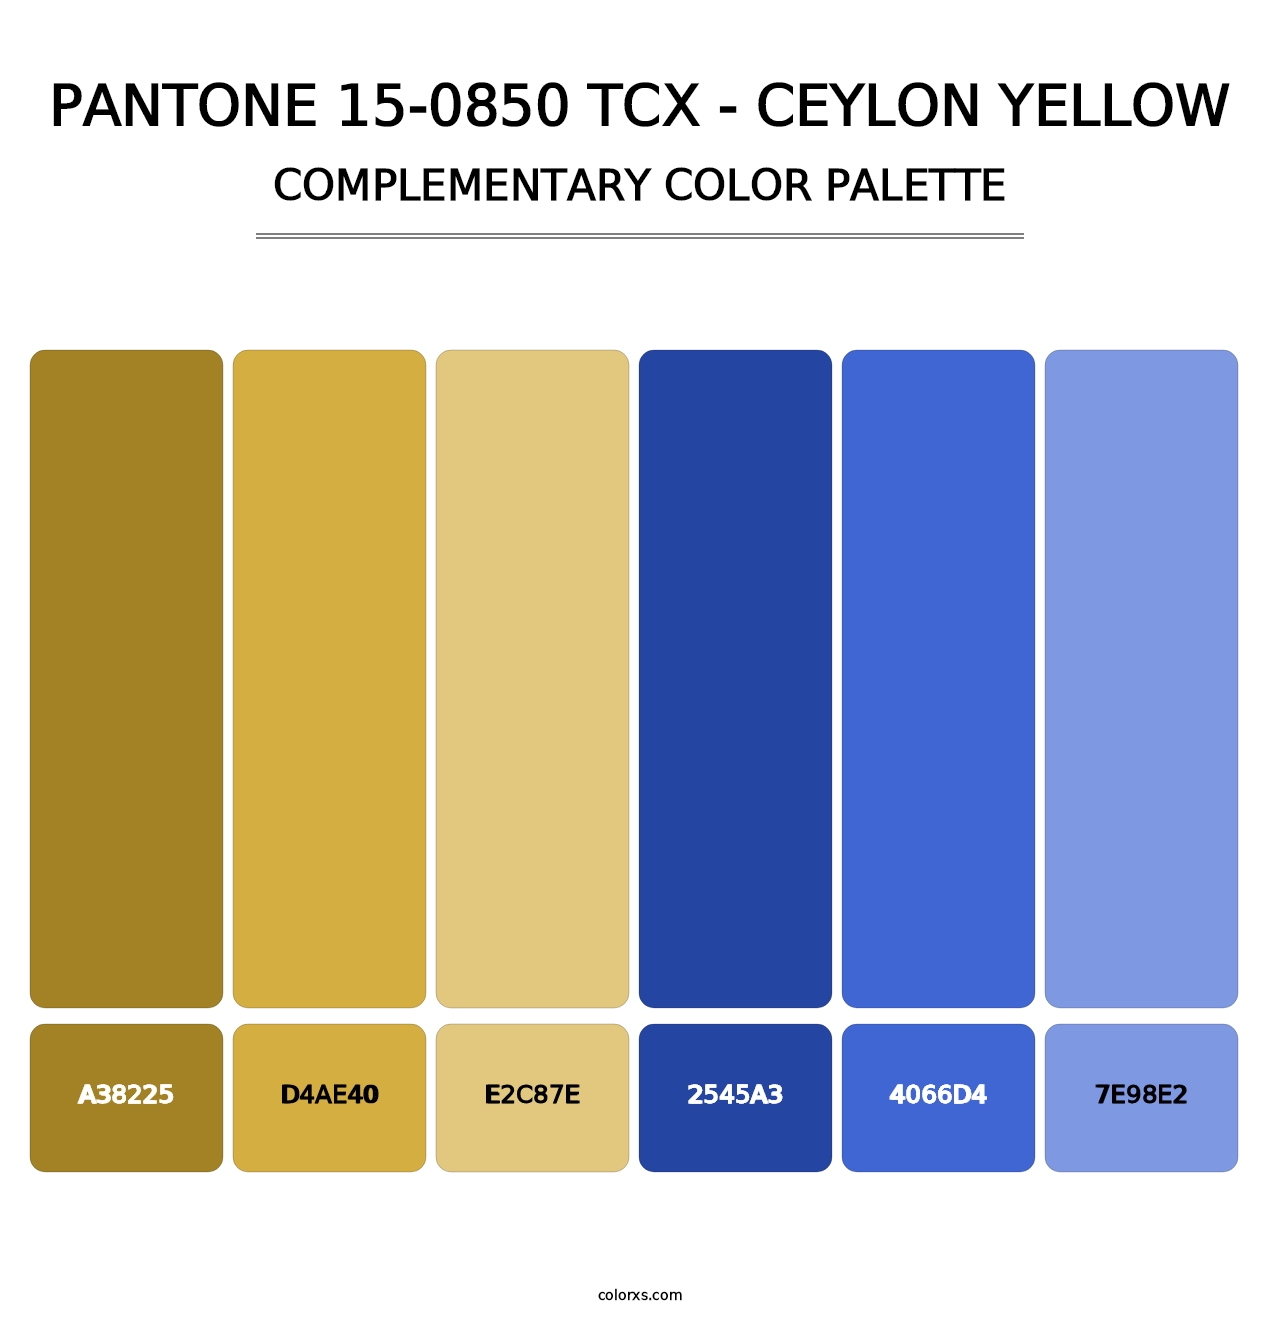 PANTONE 15-0850 TCX - Ceylon Yellow - Complementary Color Palette